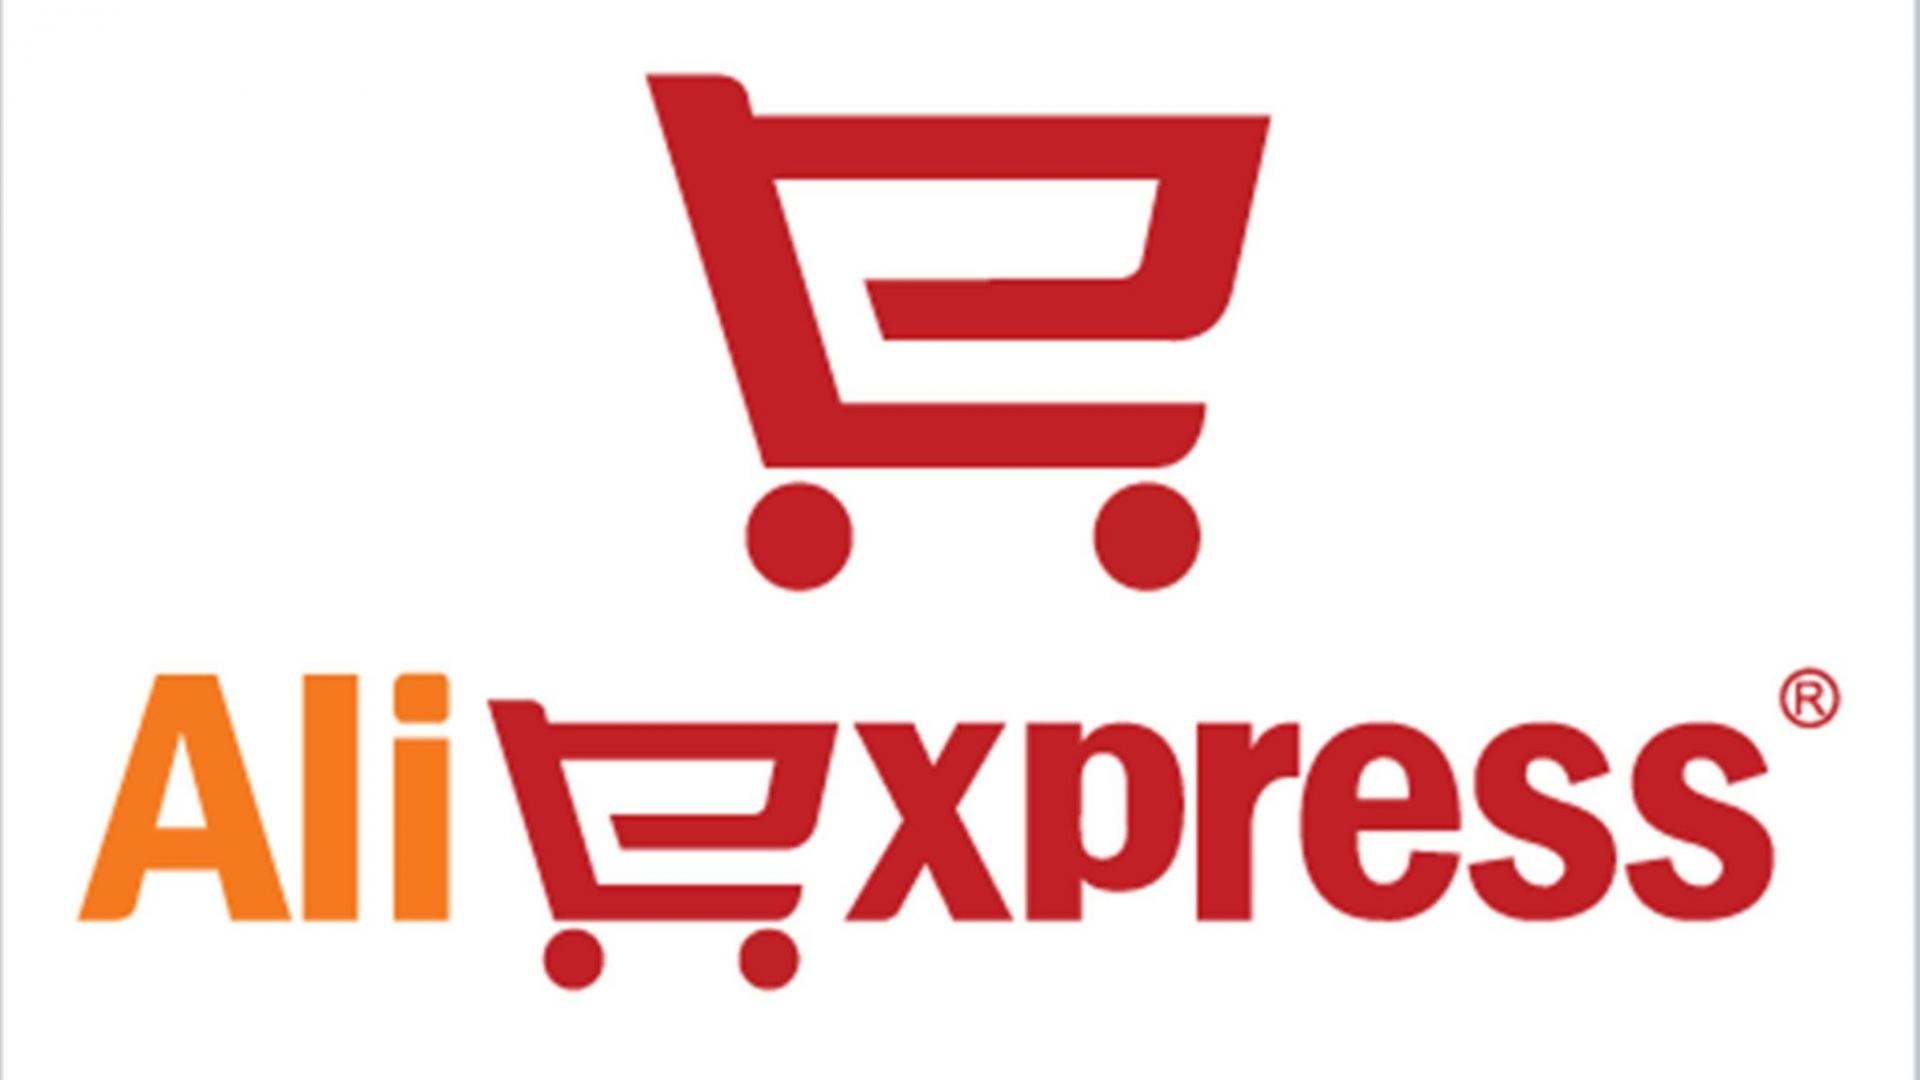 Aliexpress logo e1484966826447